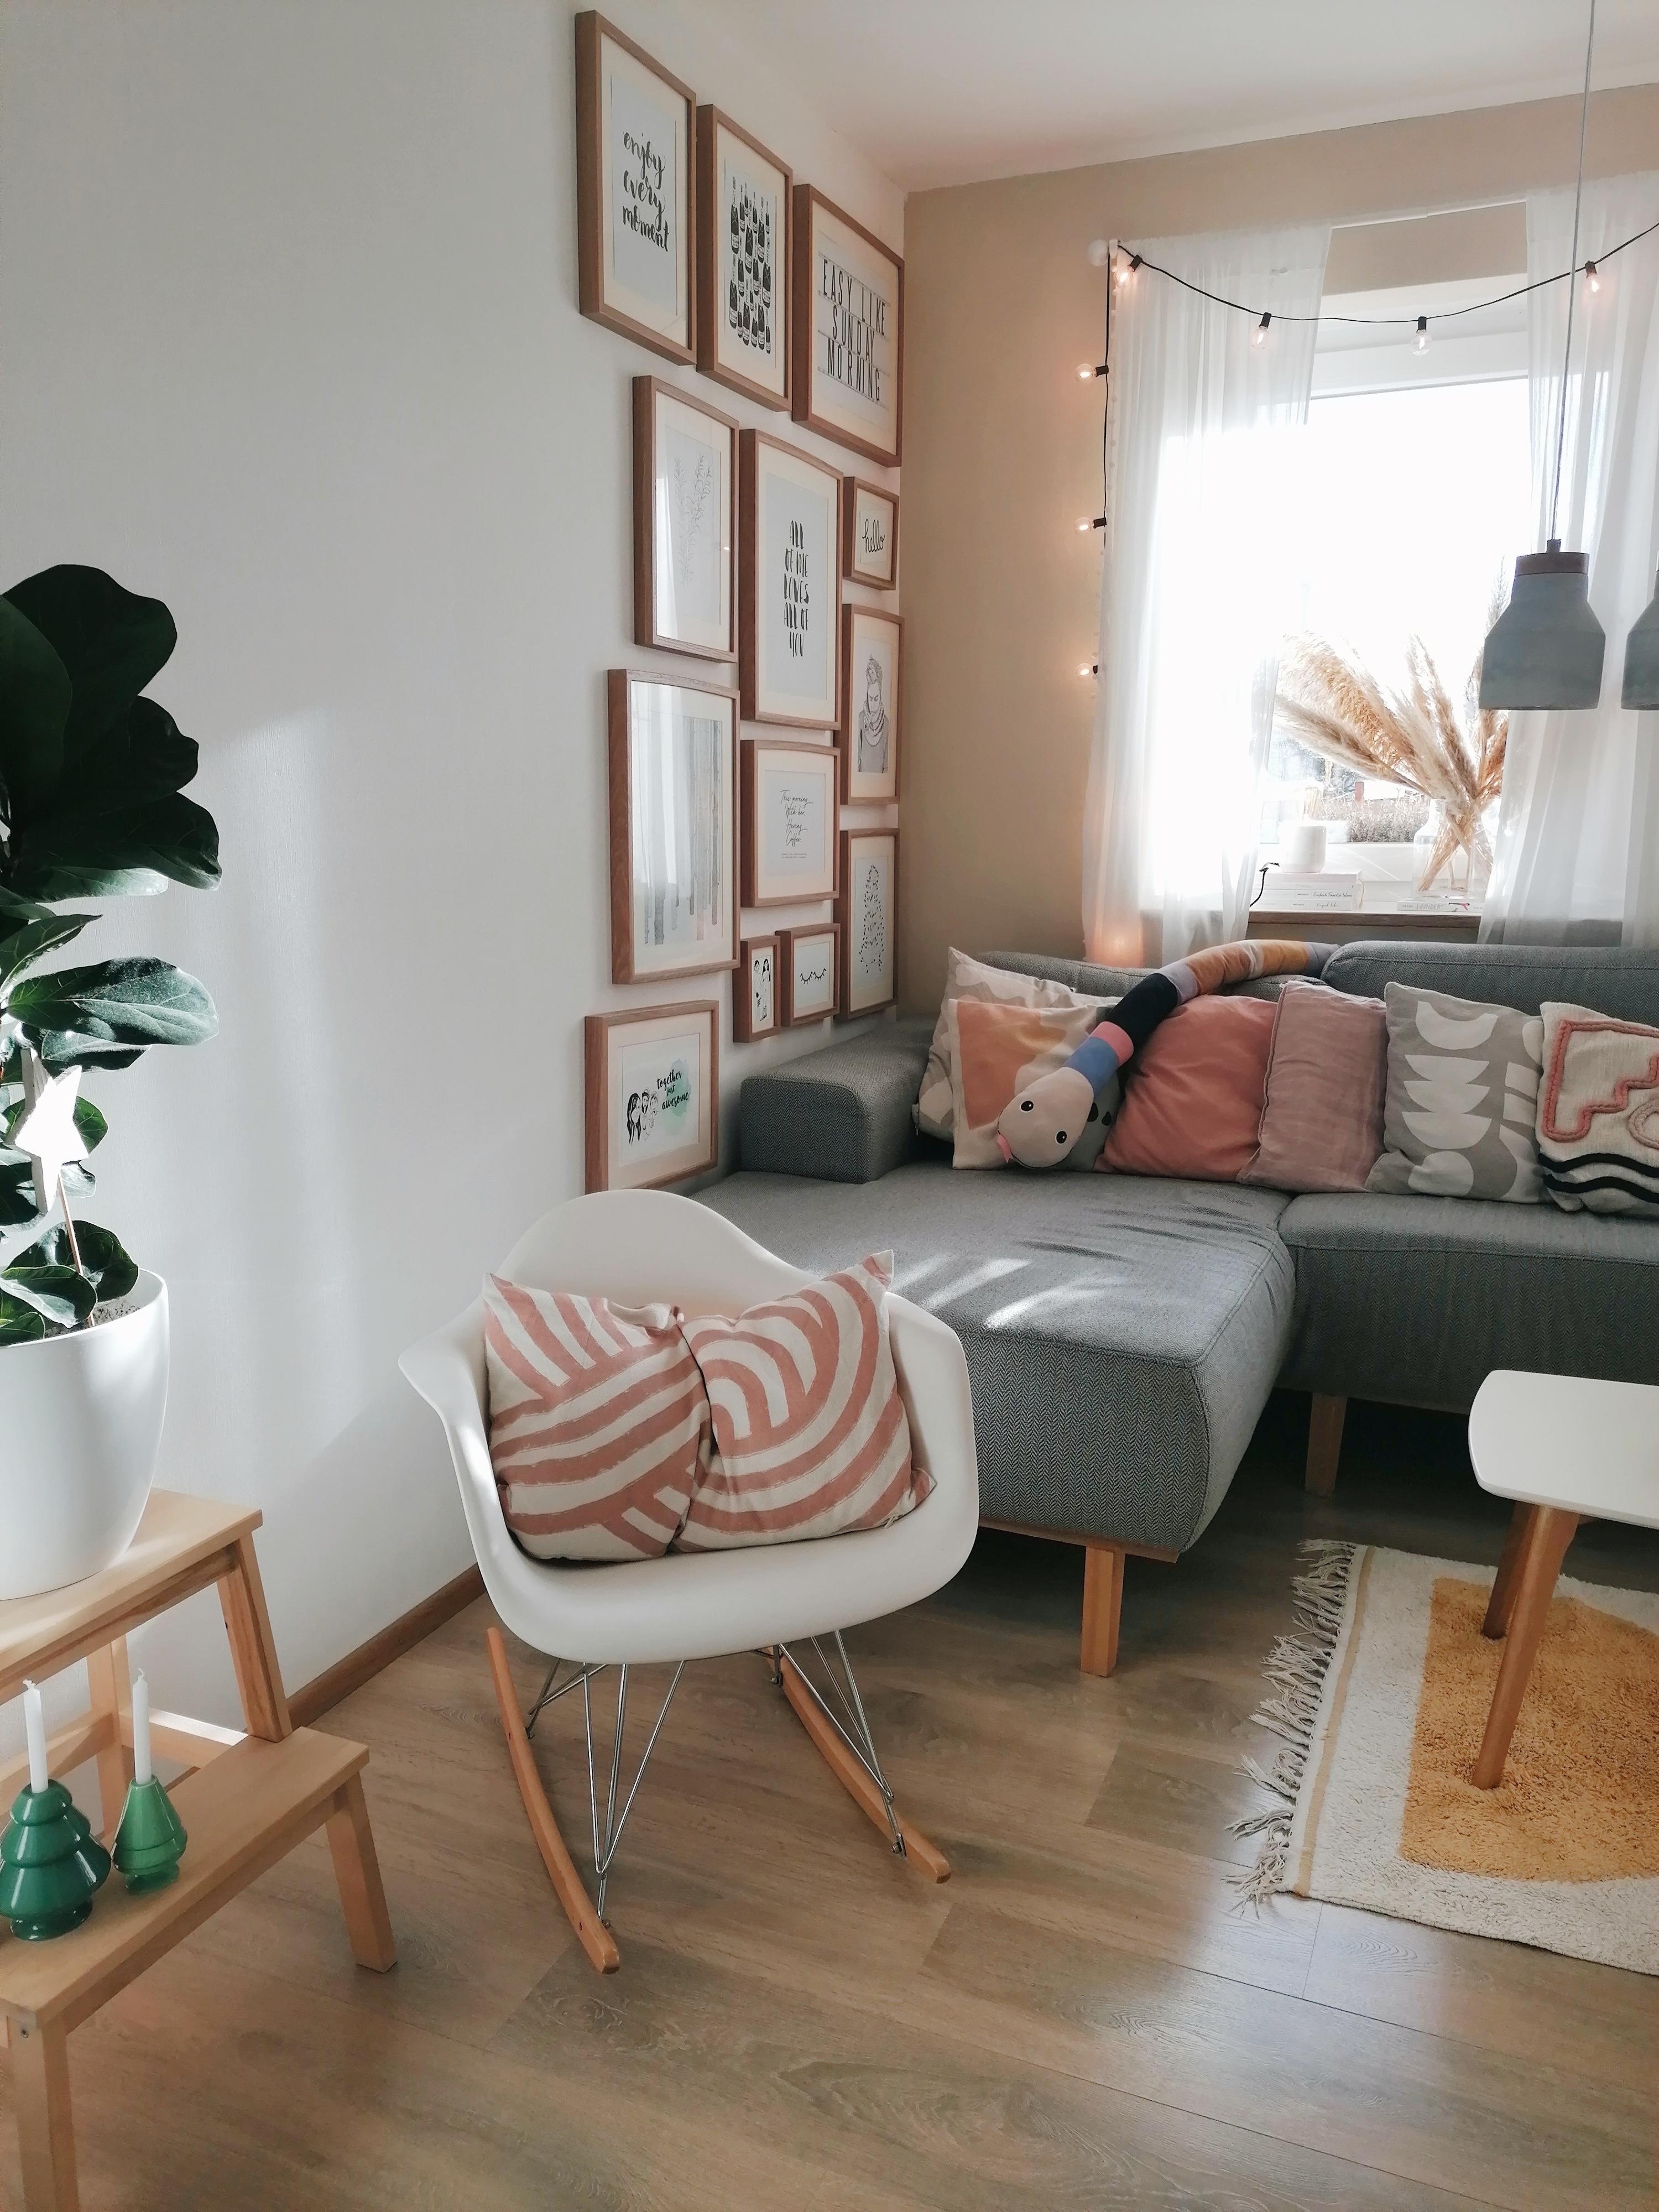 Pastellliebe
#pastell #livingroom #interior #bunt